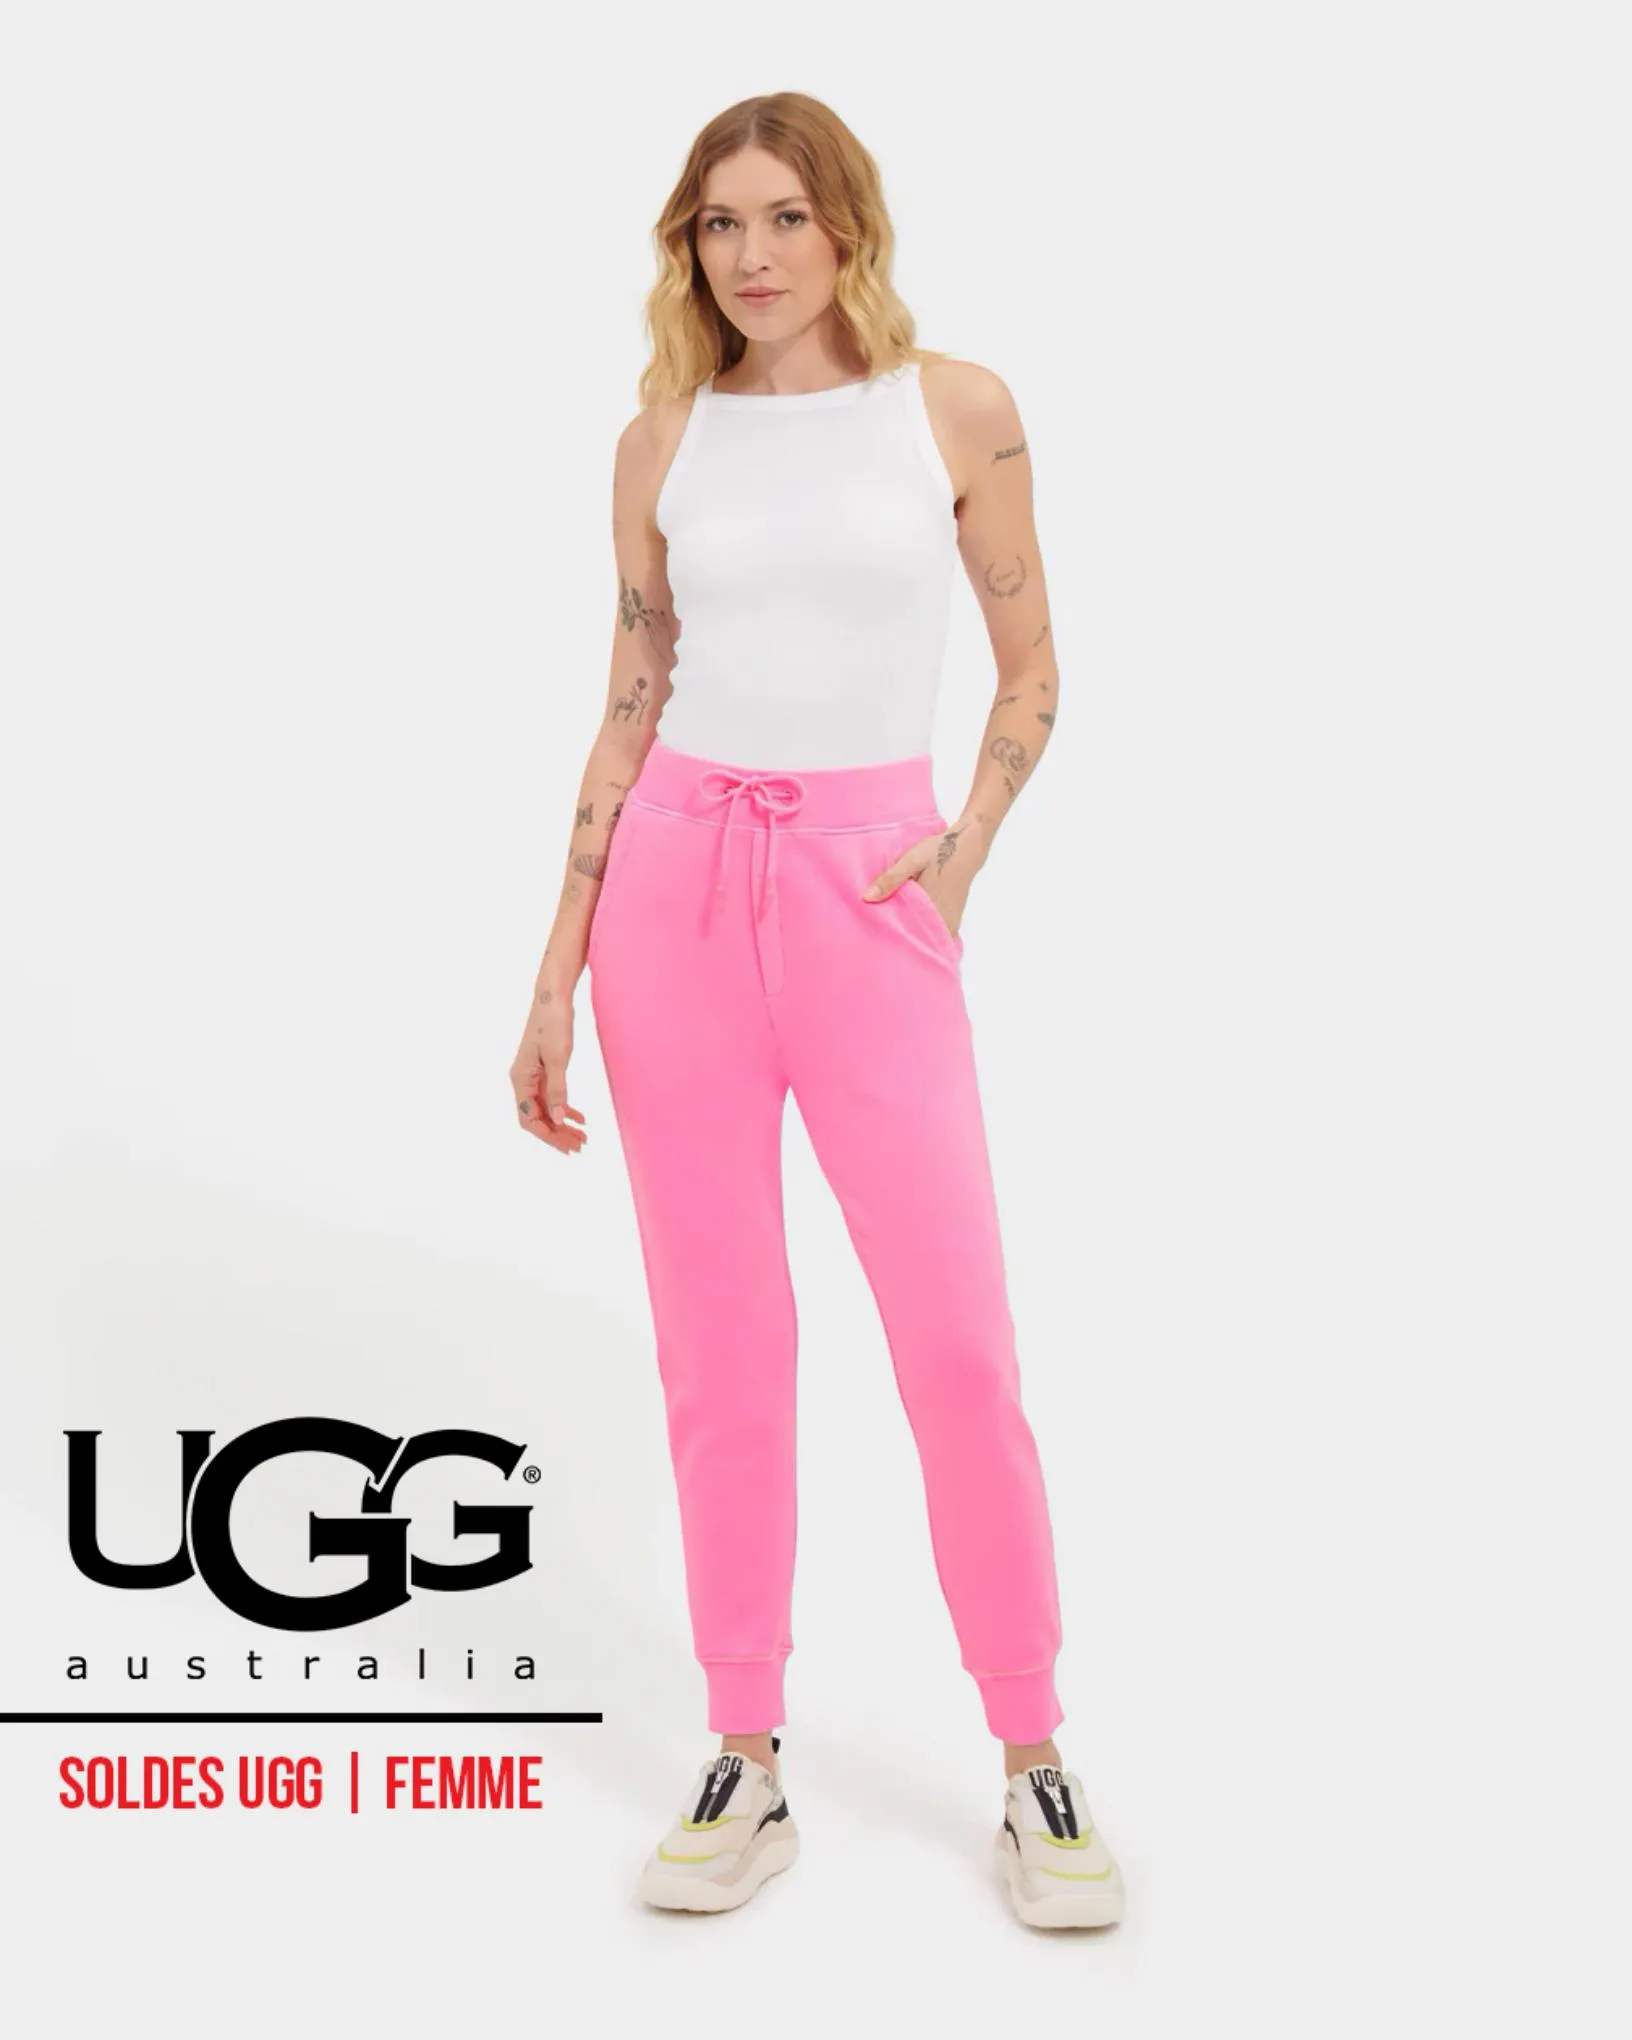 Catalogue Soldes UGG | Femme, page 00001